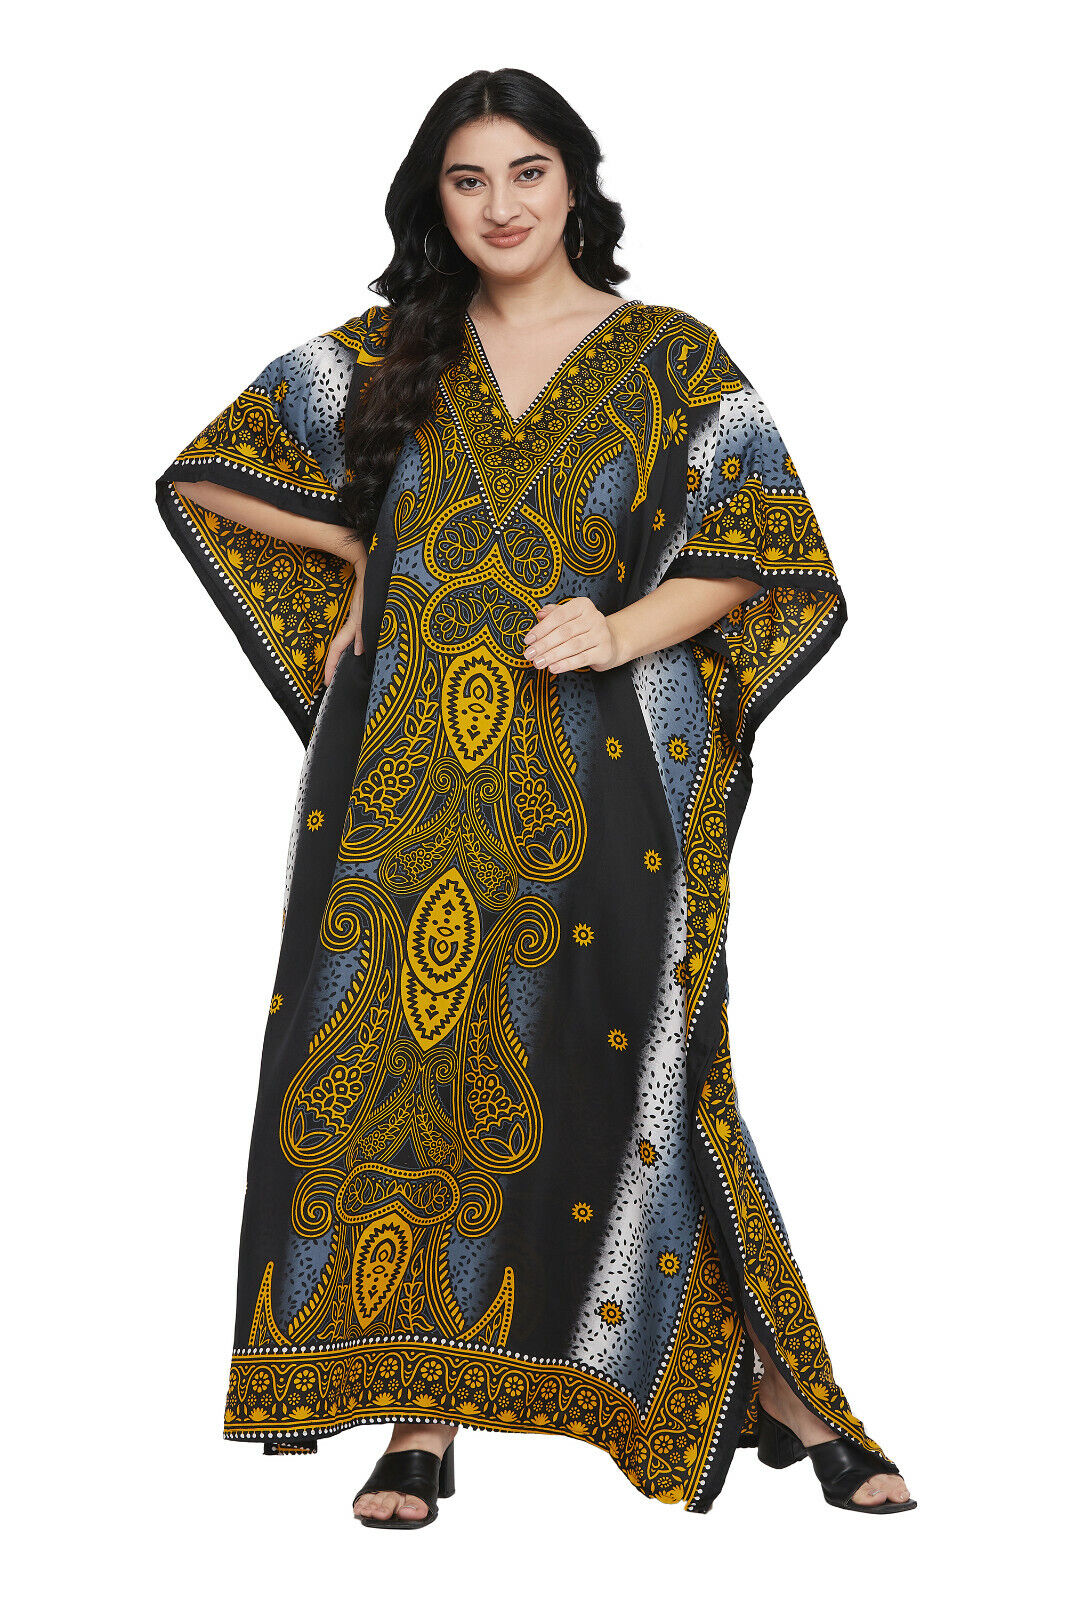 Women Boho Kaftan Kimono Maxi Dress Beach Holiday Plus Size Loose Long Sundress